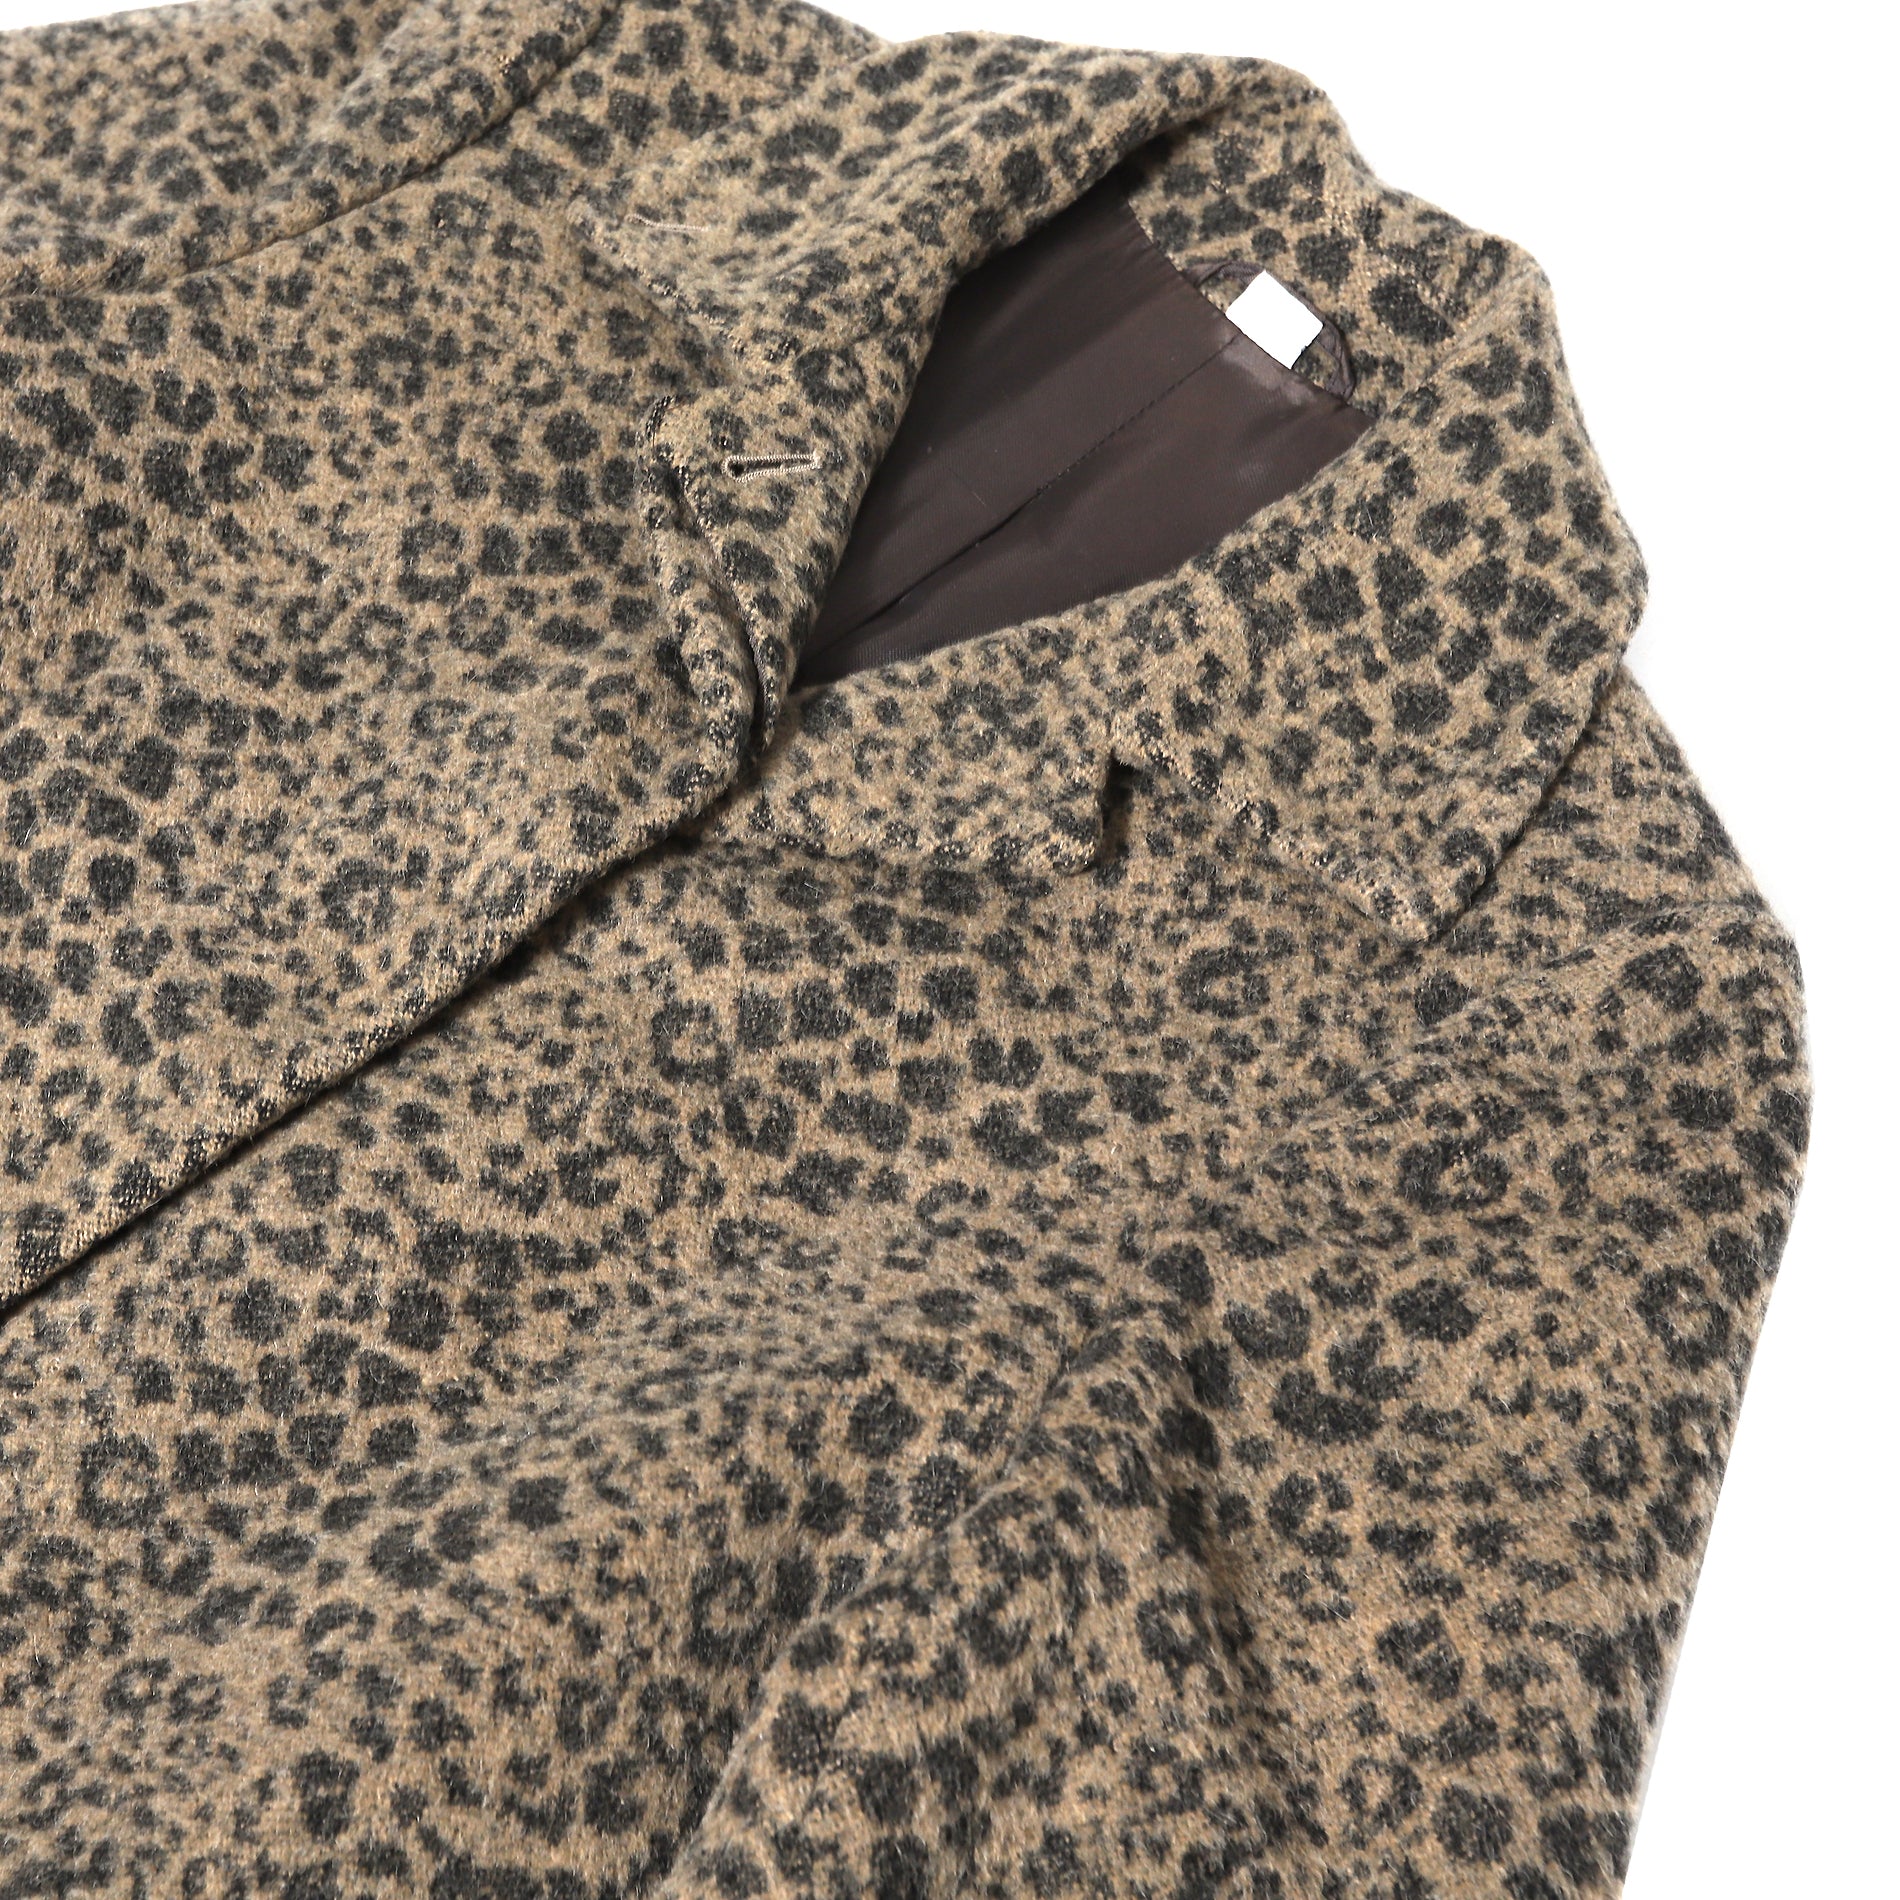 Helmut Lang Archival Leopard Wool Coat